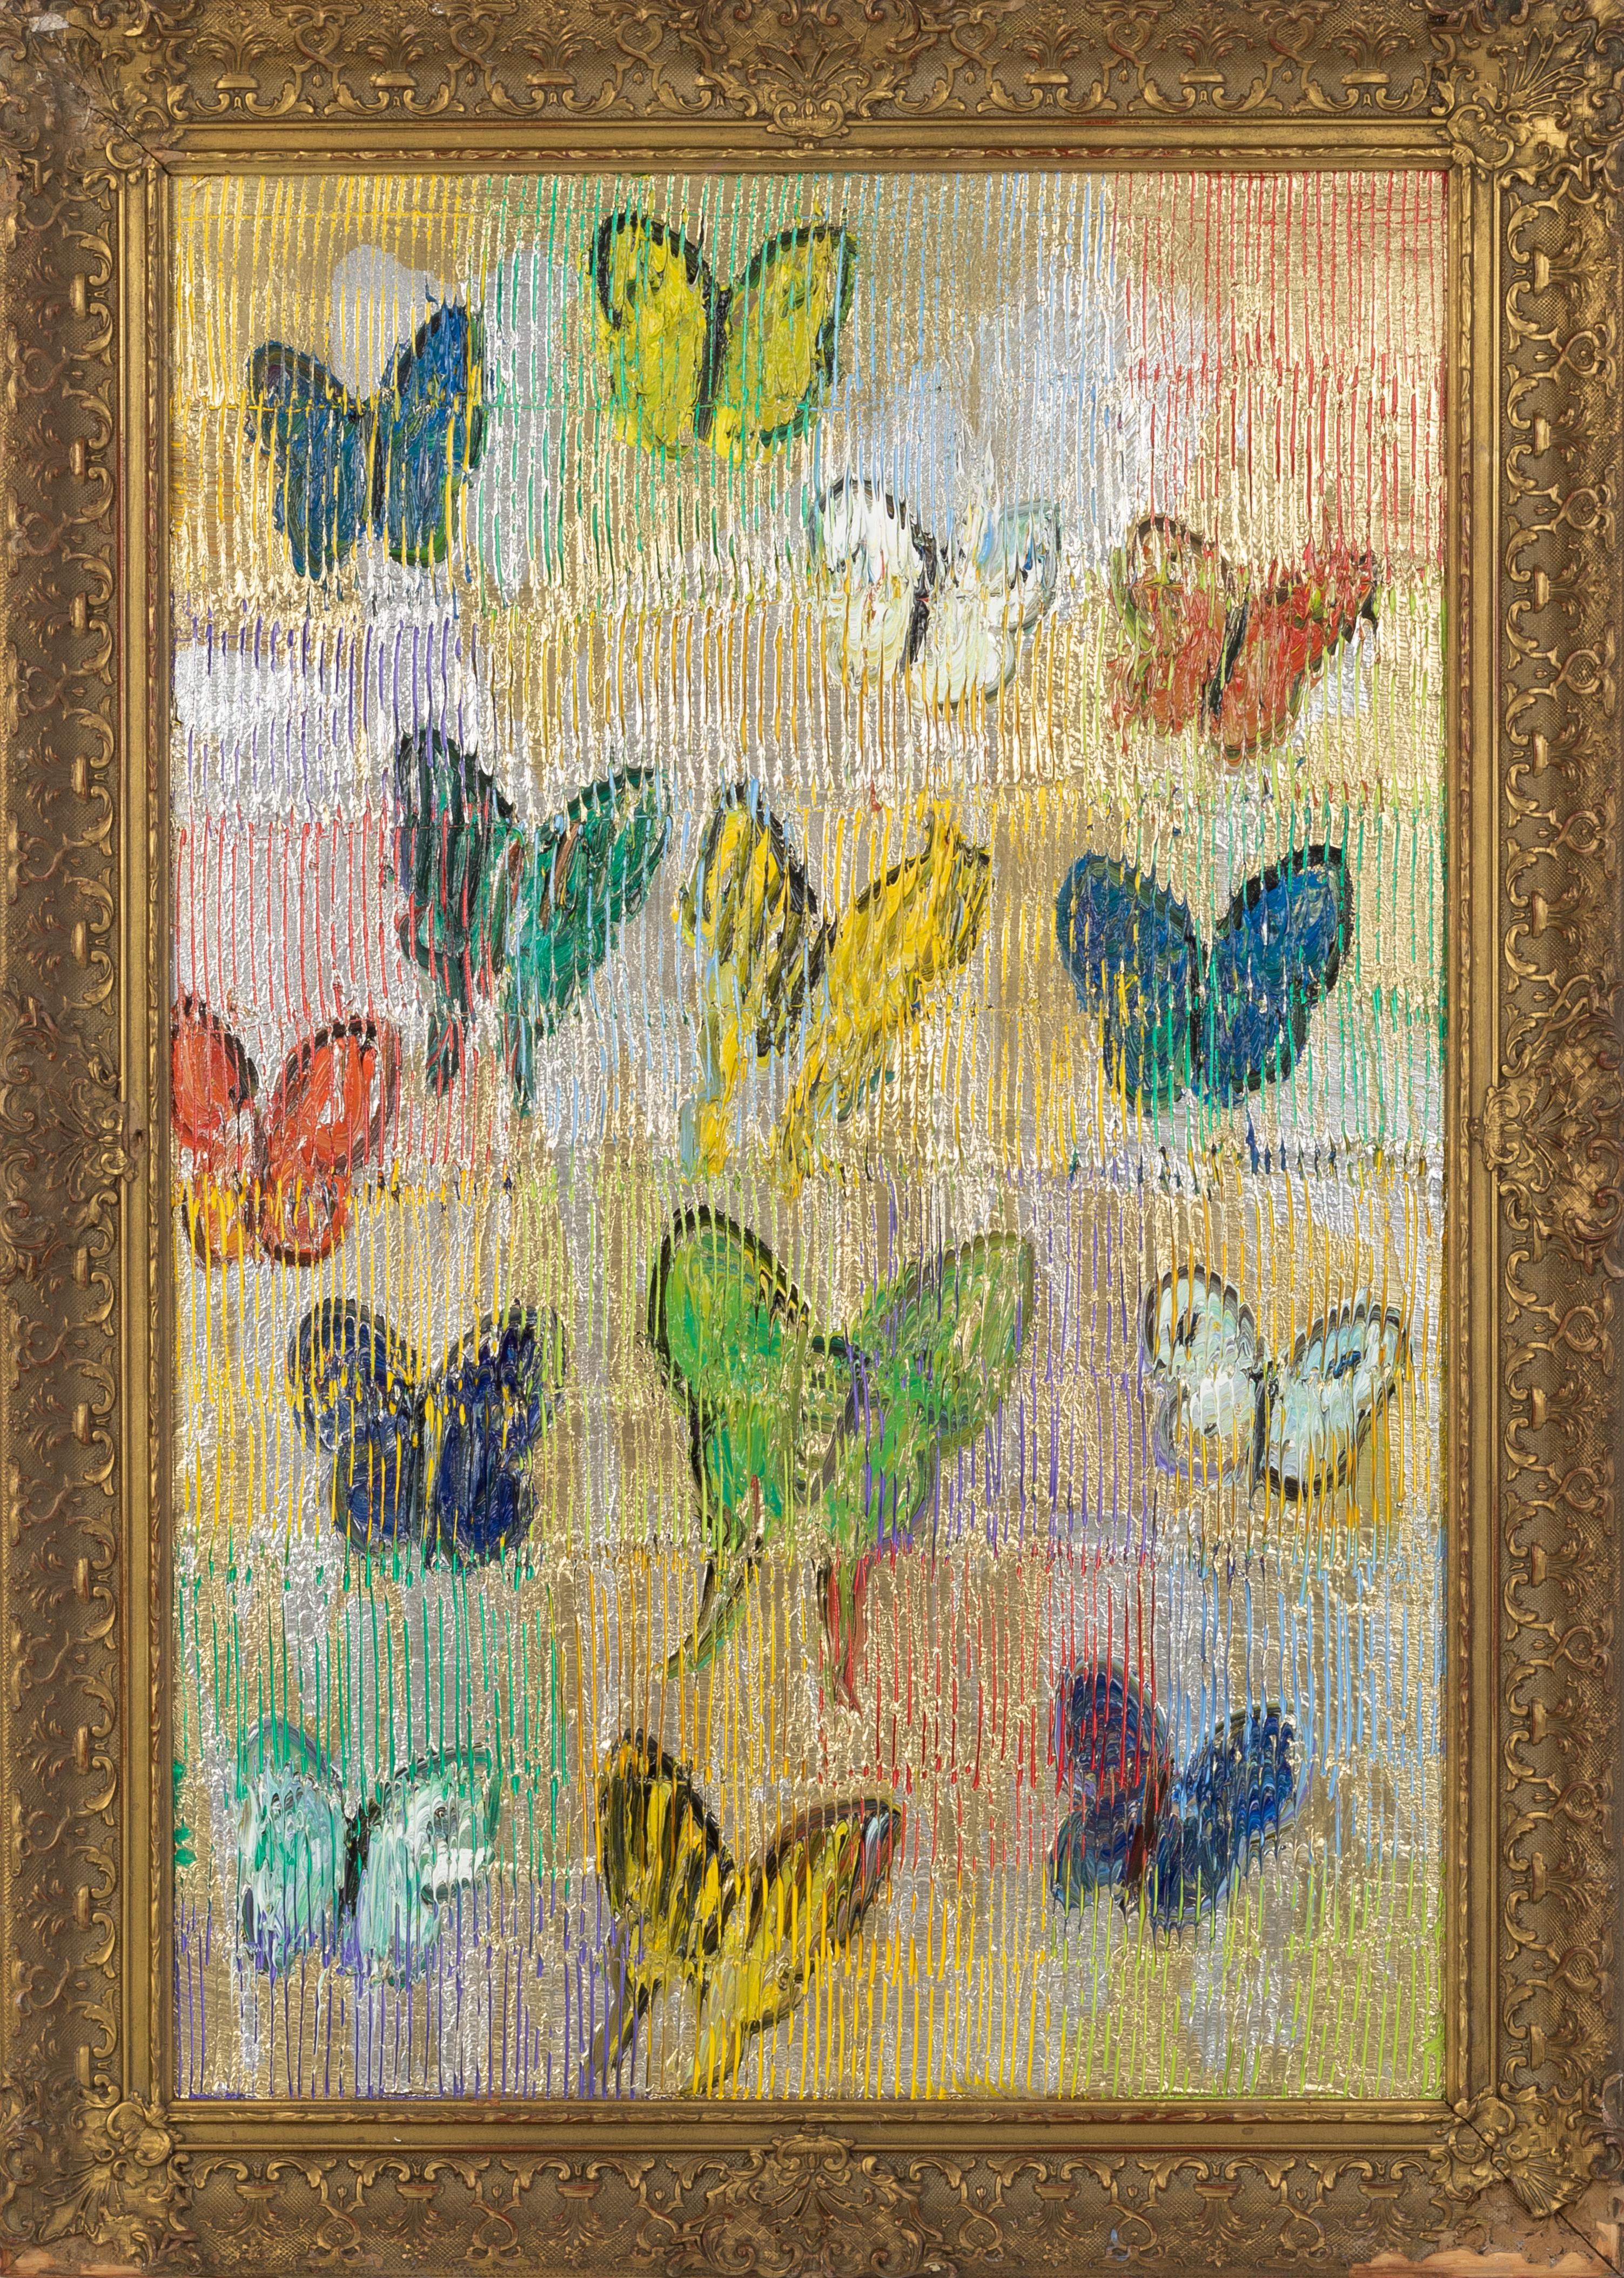 Hunt Slonem "Malechite" Metallic Multicolored Butterflies
Multicolored butterflies on metallic gold / silver / multicolored surface in a gold ornate frame  

Unframed: 36 x 24 in.  
Framed: 42 x 30 in. 
*frame included*  

Hunt Slonem is a